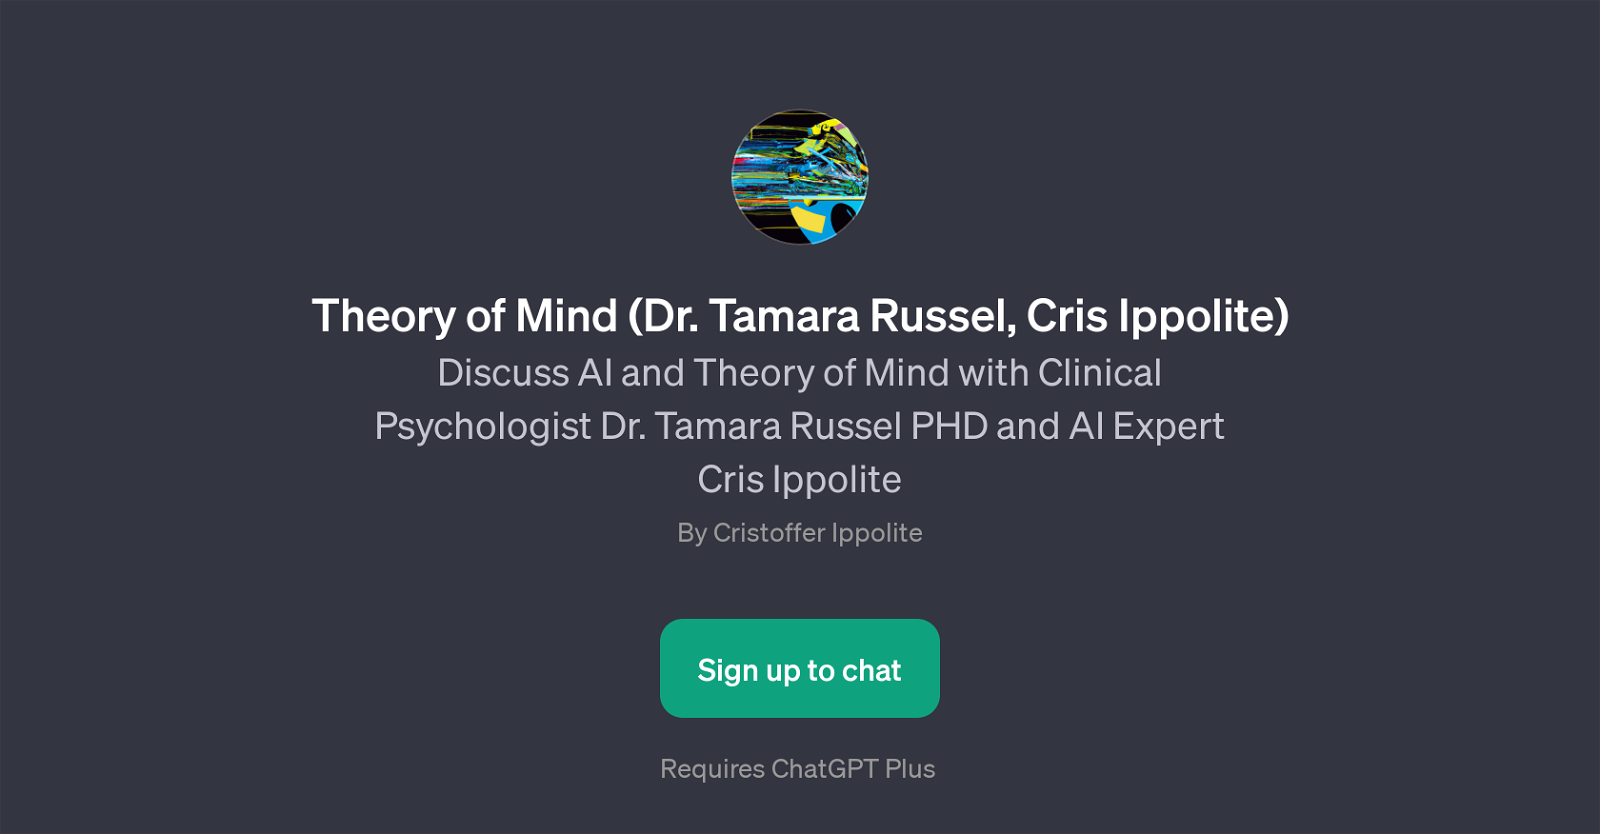 Theory of Mind (Dr. Tamara Russel, Cris Ippolite) website